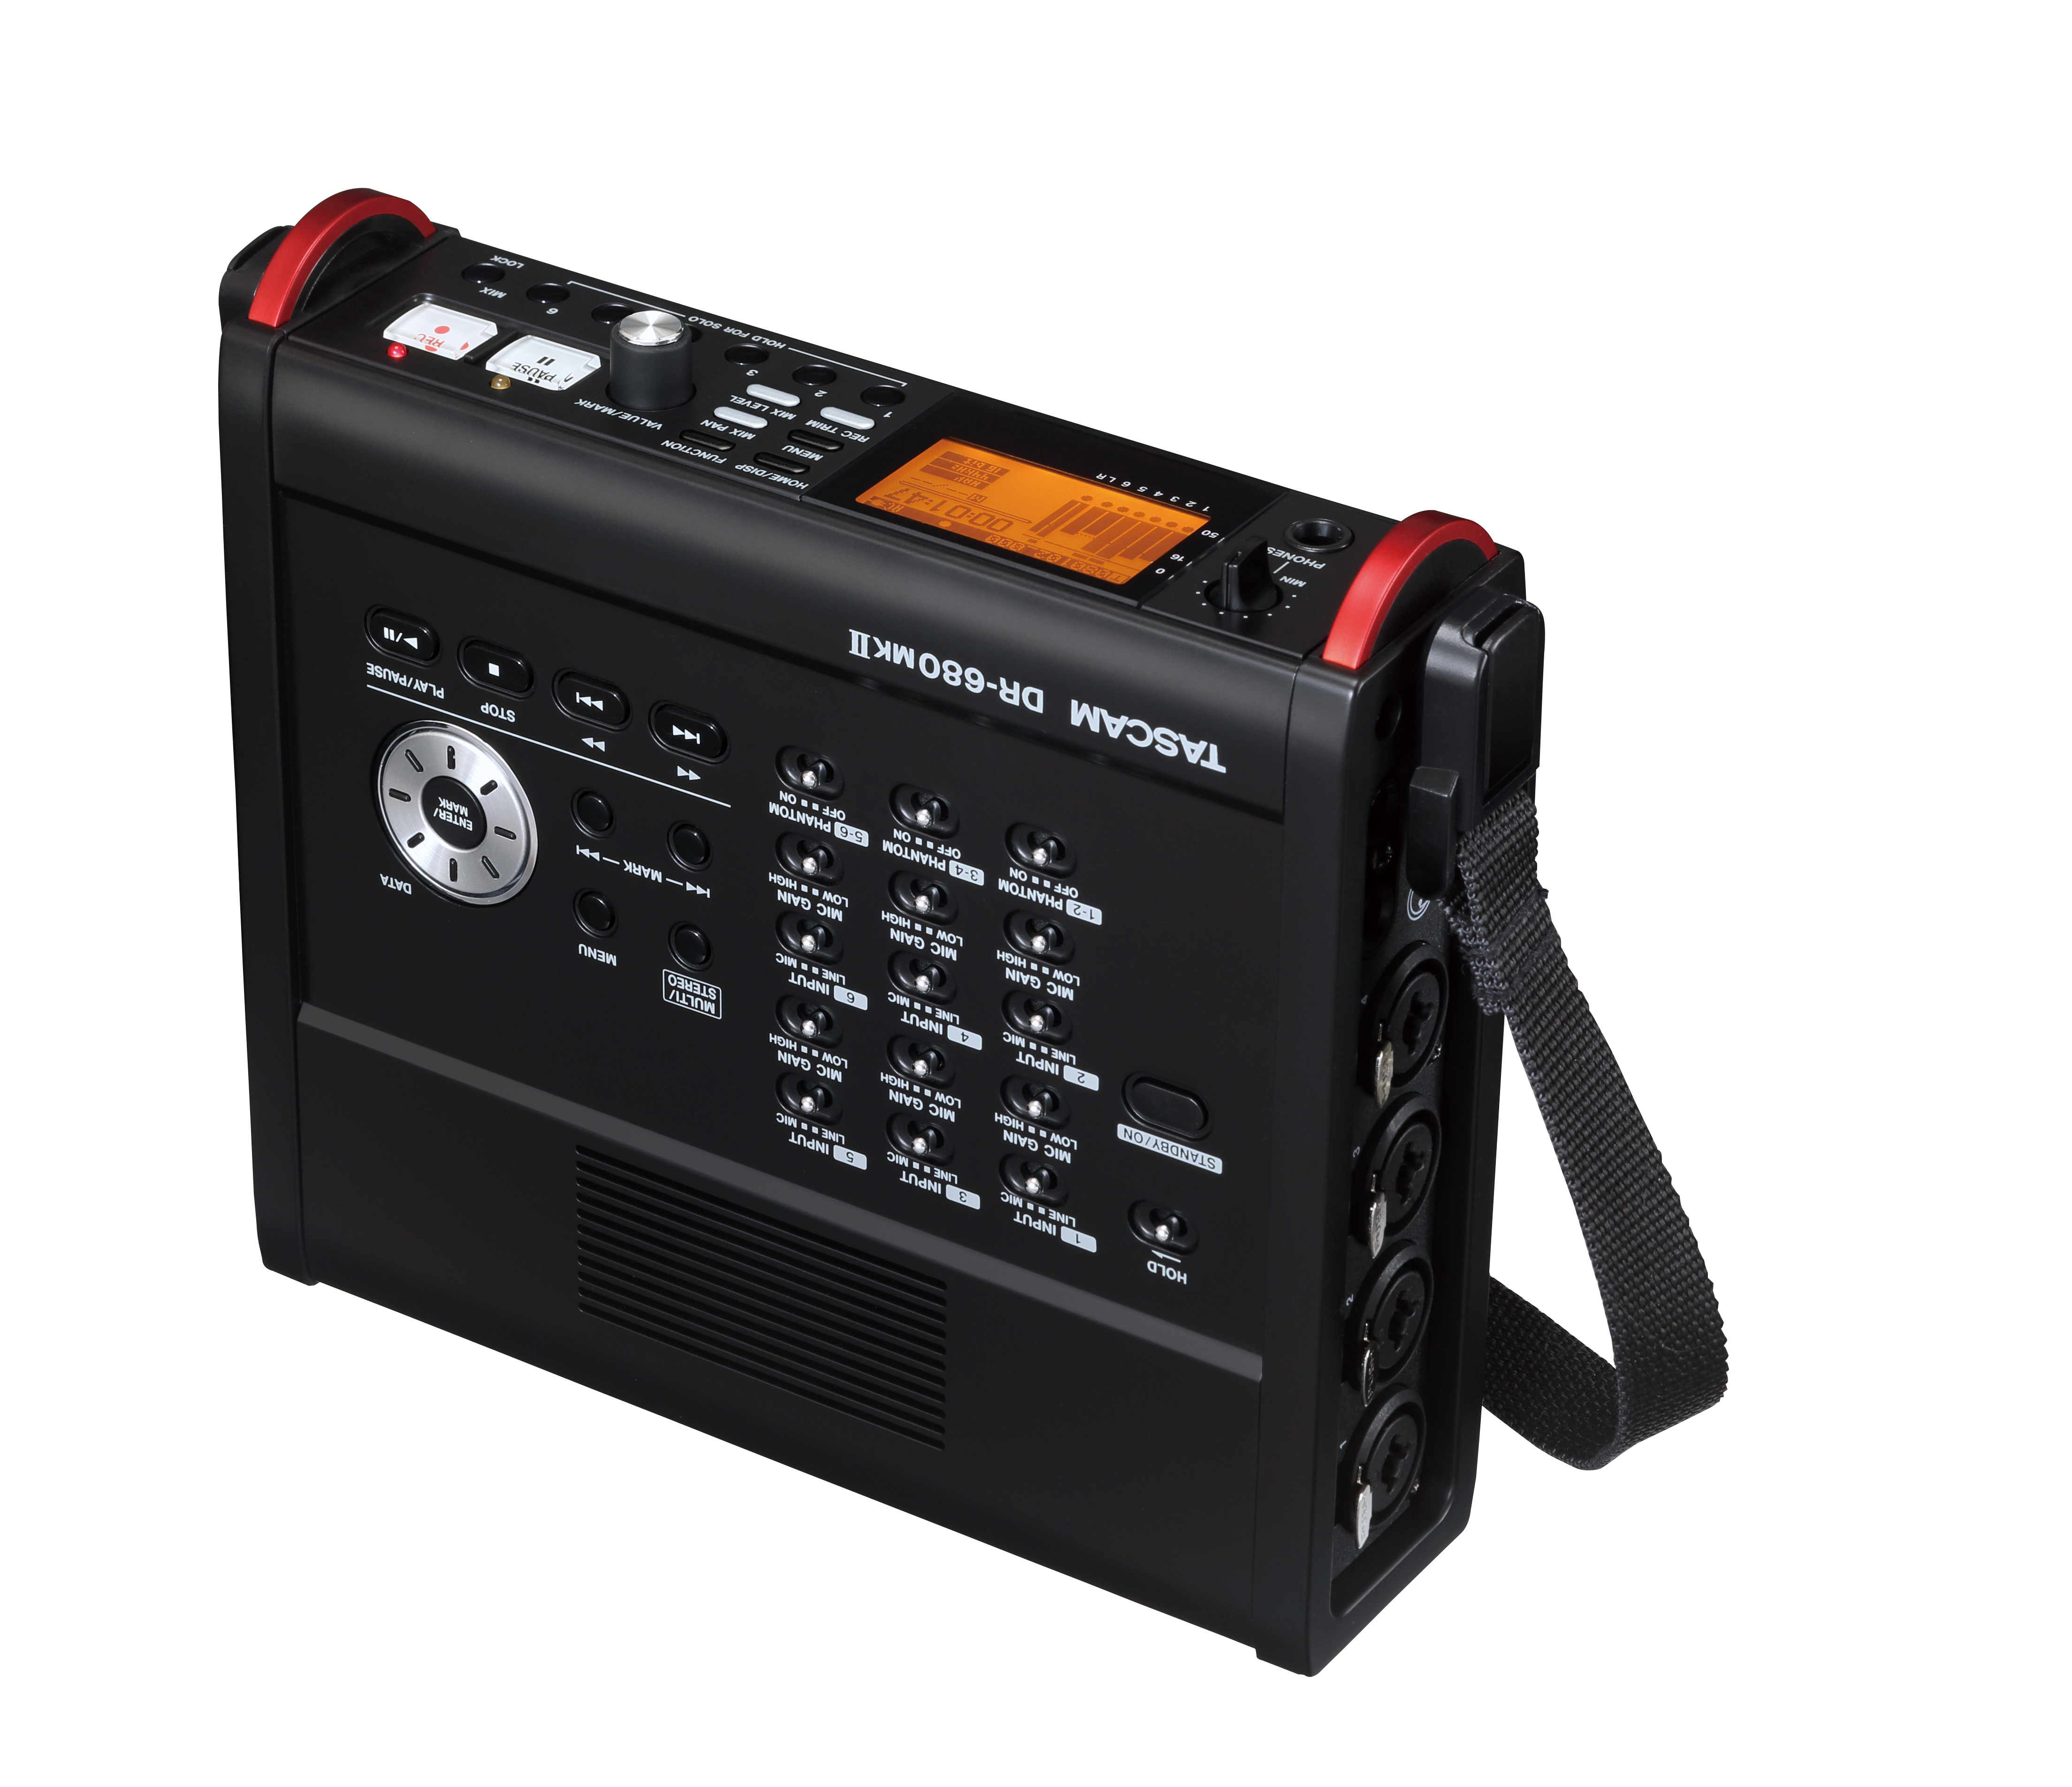 Tascam Dr-680 Mk2 - Portable recorder - Variation 6